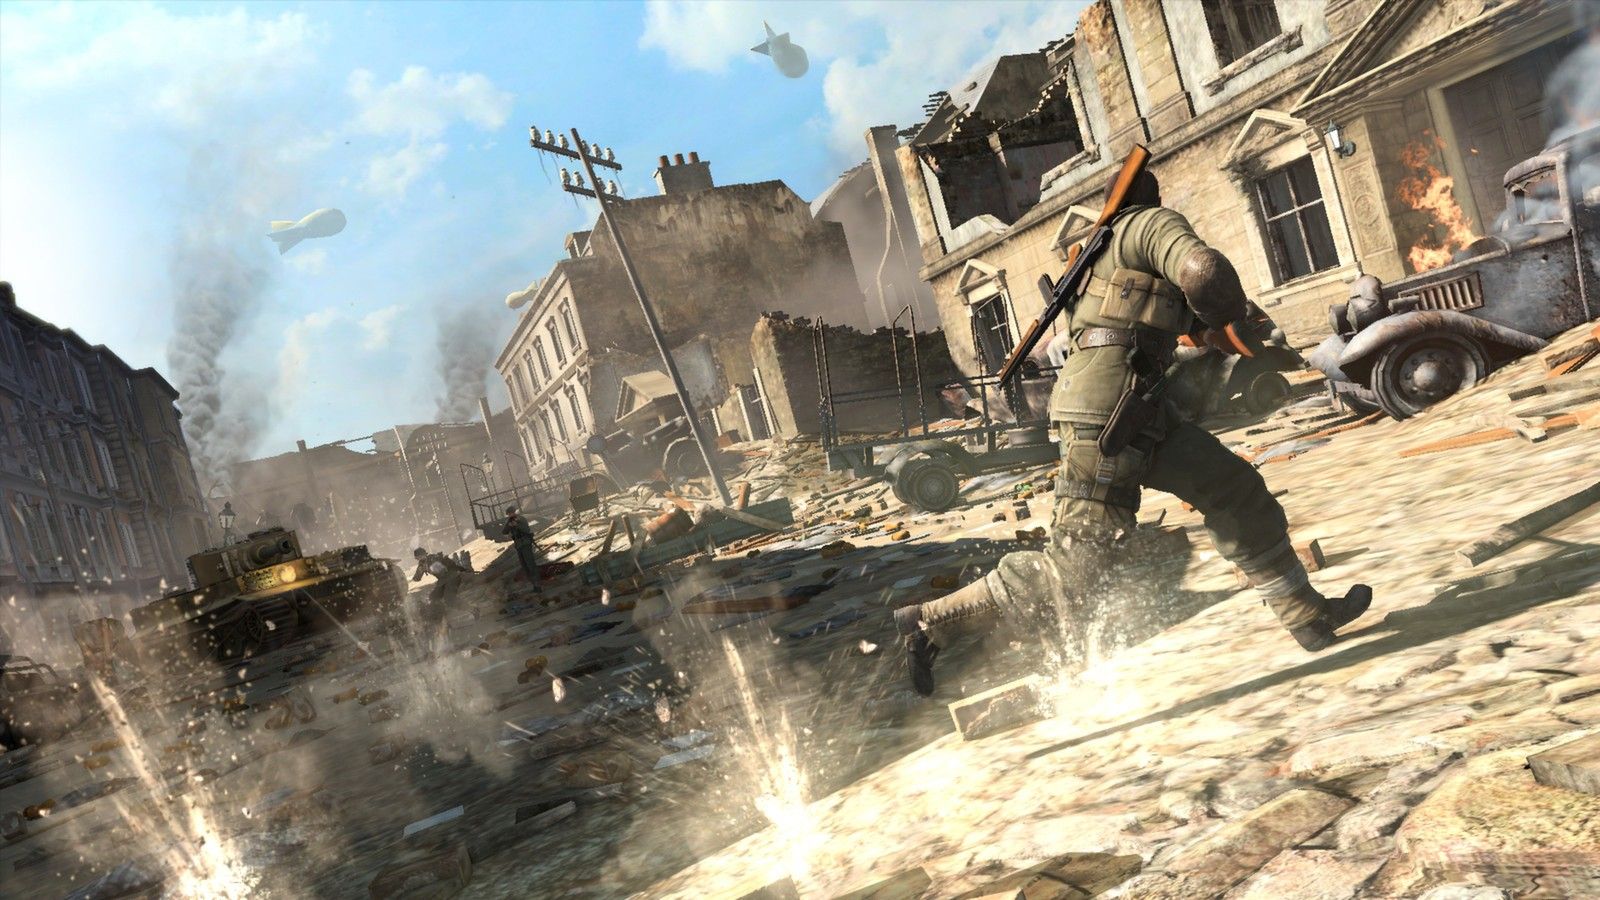 Rebellion is Putting Players Back Behind Enemy Lines in Remastered 'Sniper Elite V2'